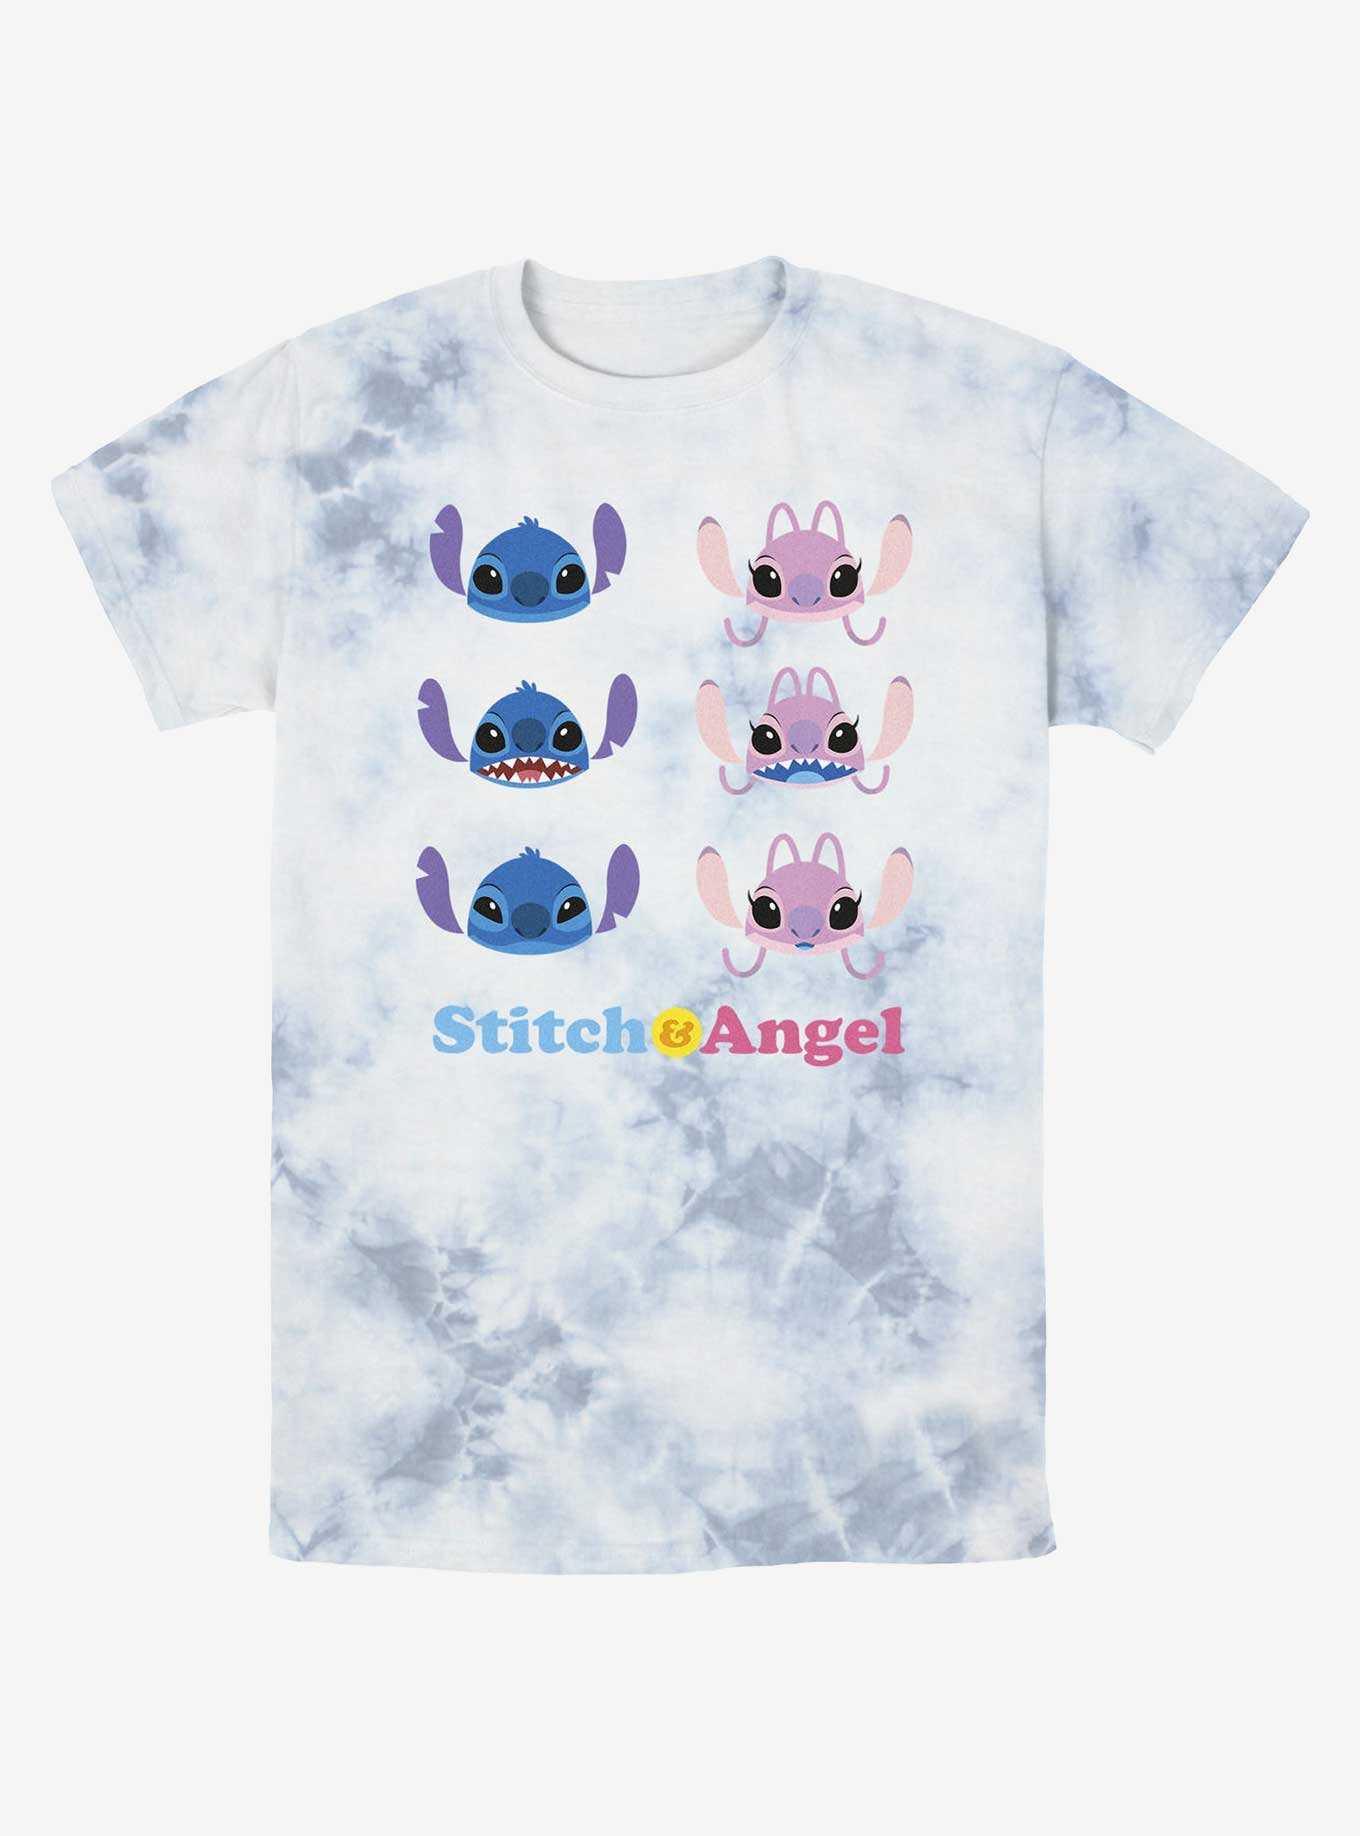 Disney Lilo & Stitch Angel & Stitch Faces Tie-Dye T-Shirt, , hi-res